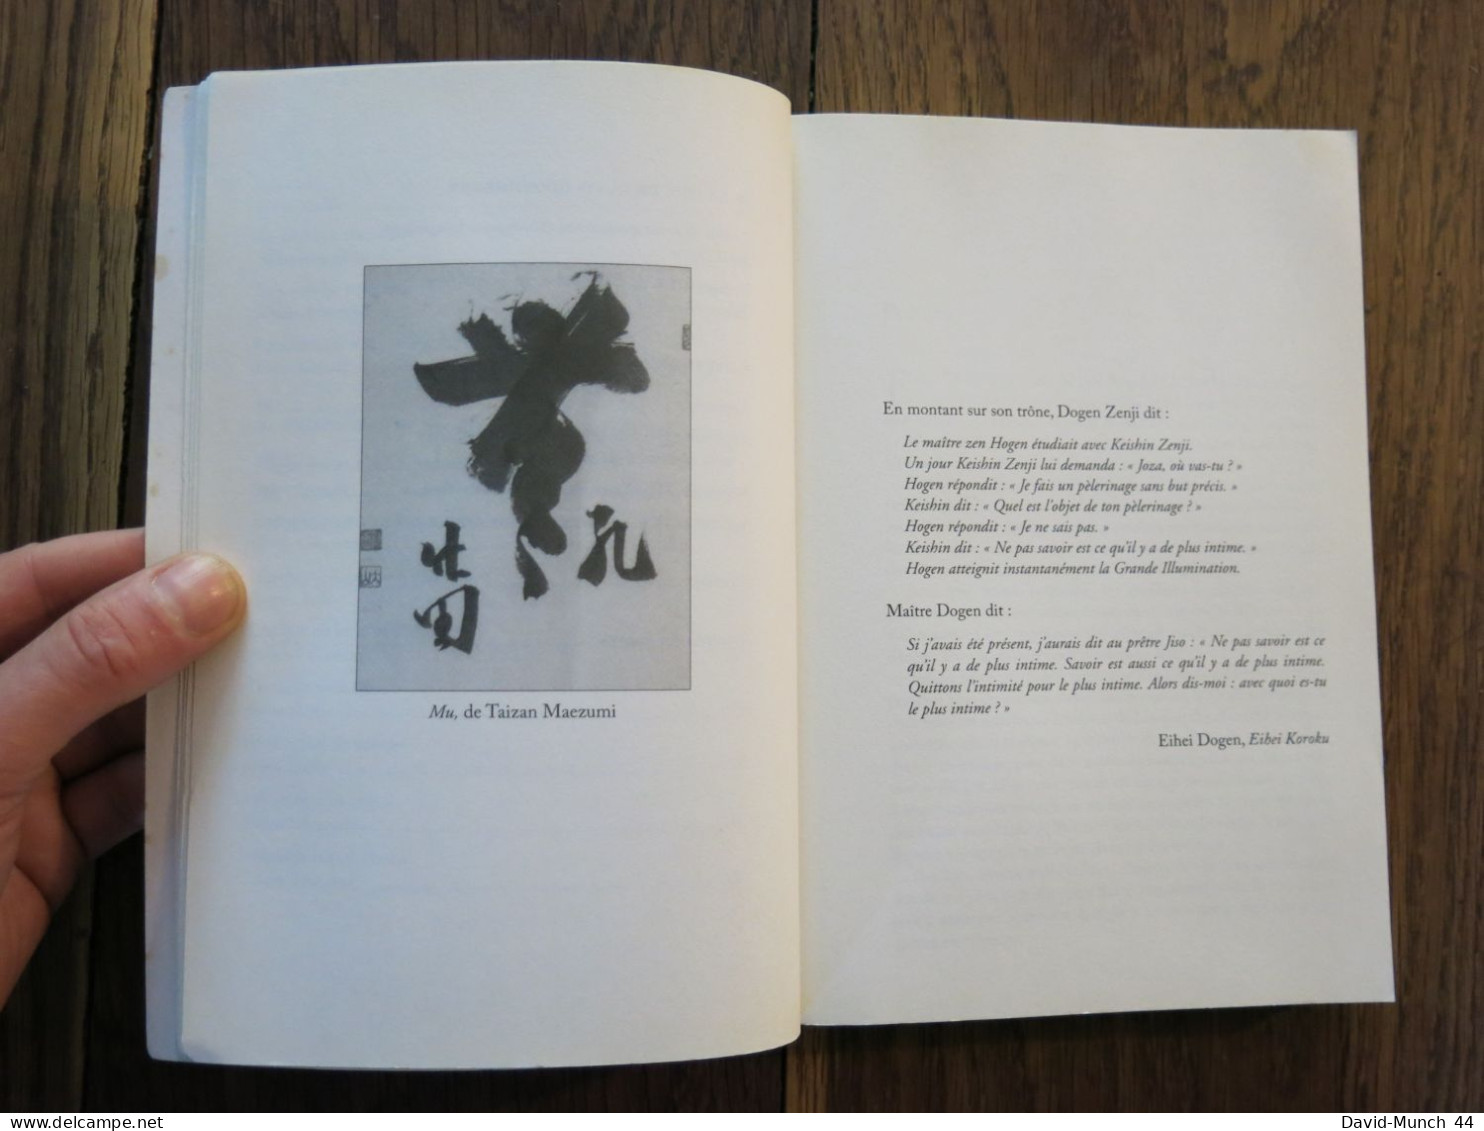 La pratique du Zen de Bernie Glassman et Taizan Maezumi. Editions Véga. 2008